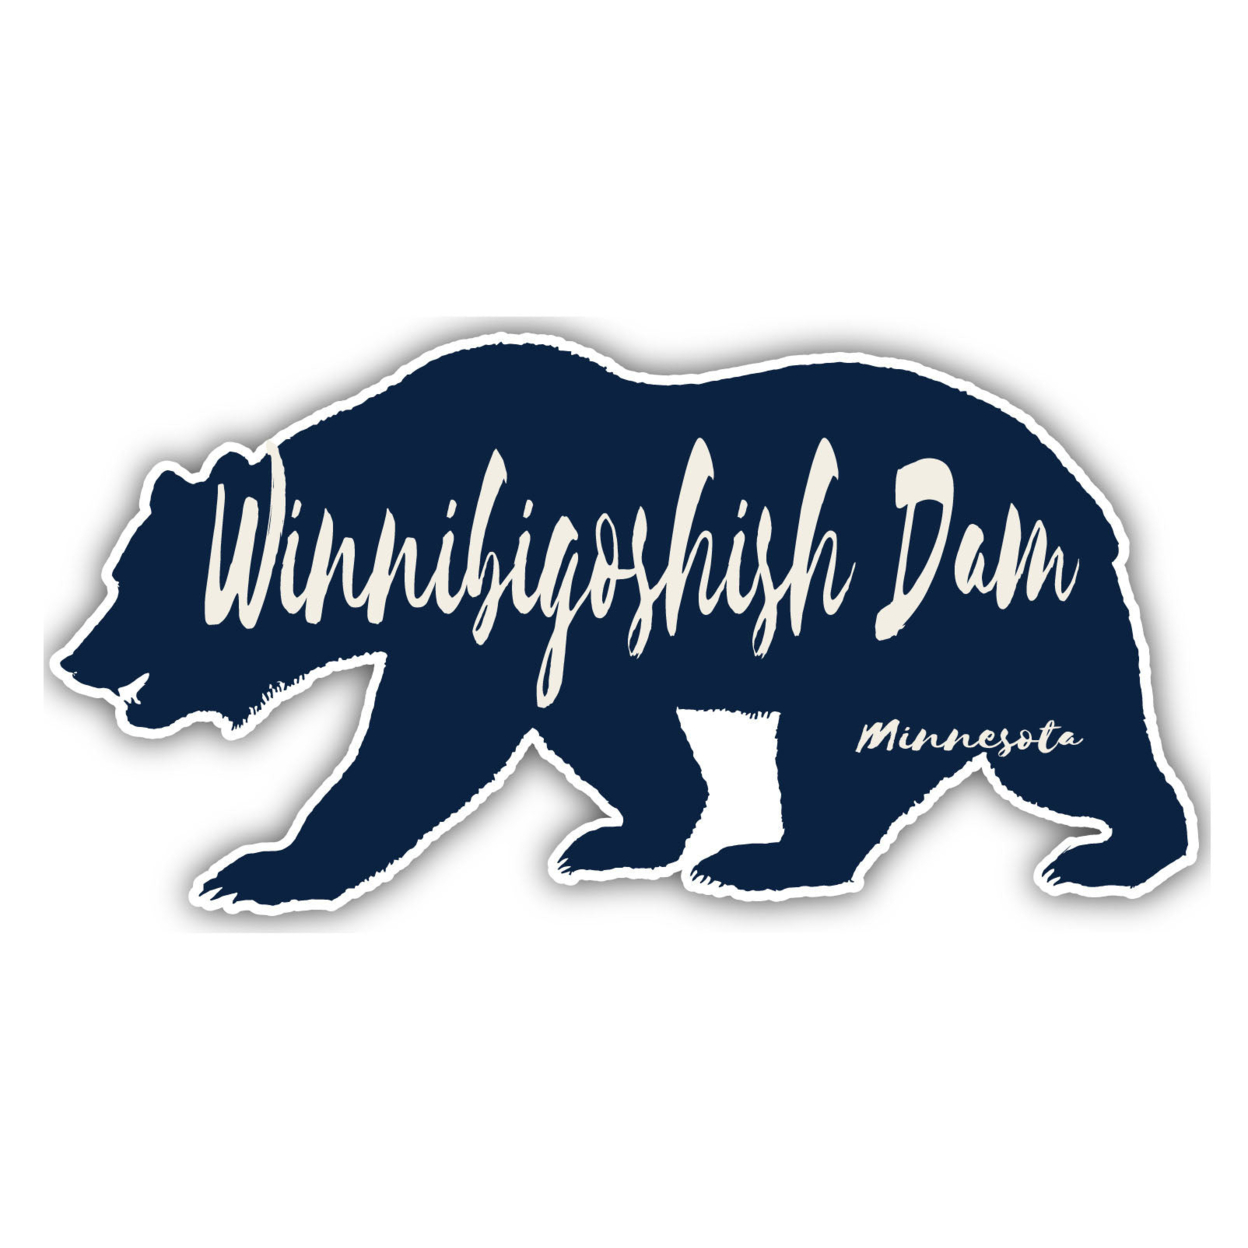 Winnibigoshish Dam Minnesota Souvenir Decorative Stickers (Choose Theme And Size) - Single Unit, 4-Inch, Bear